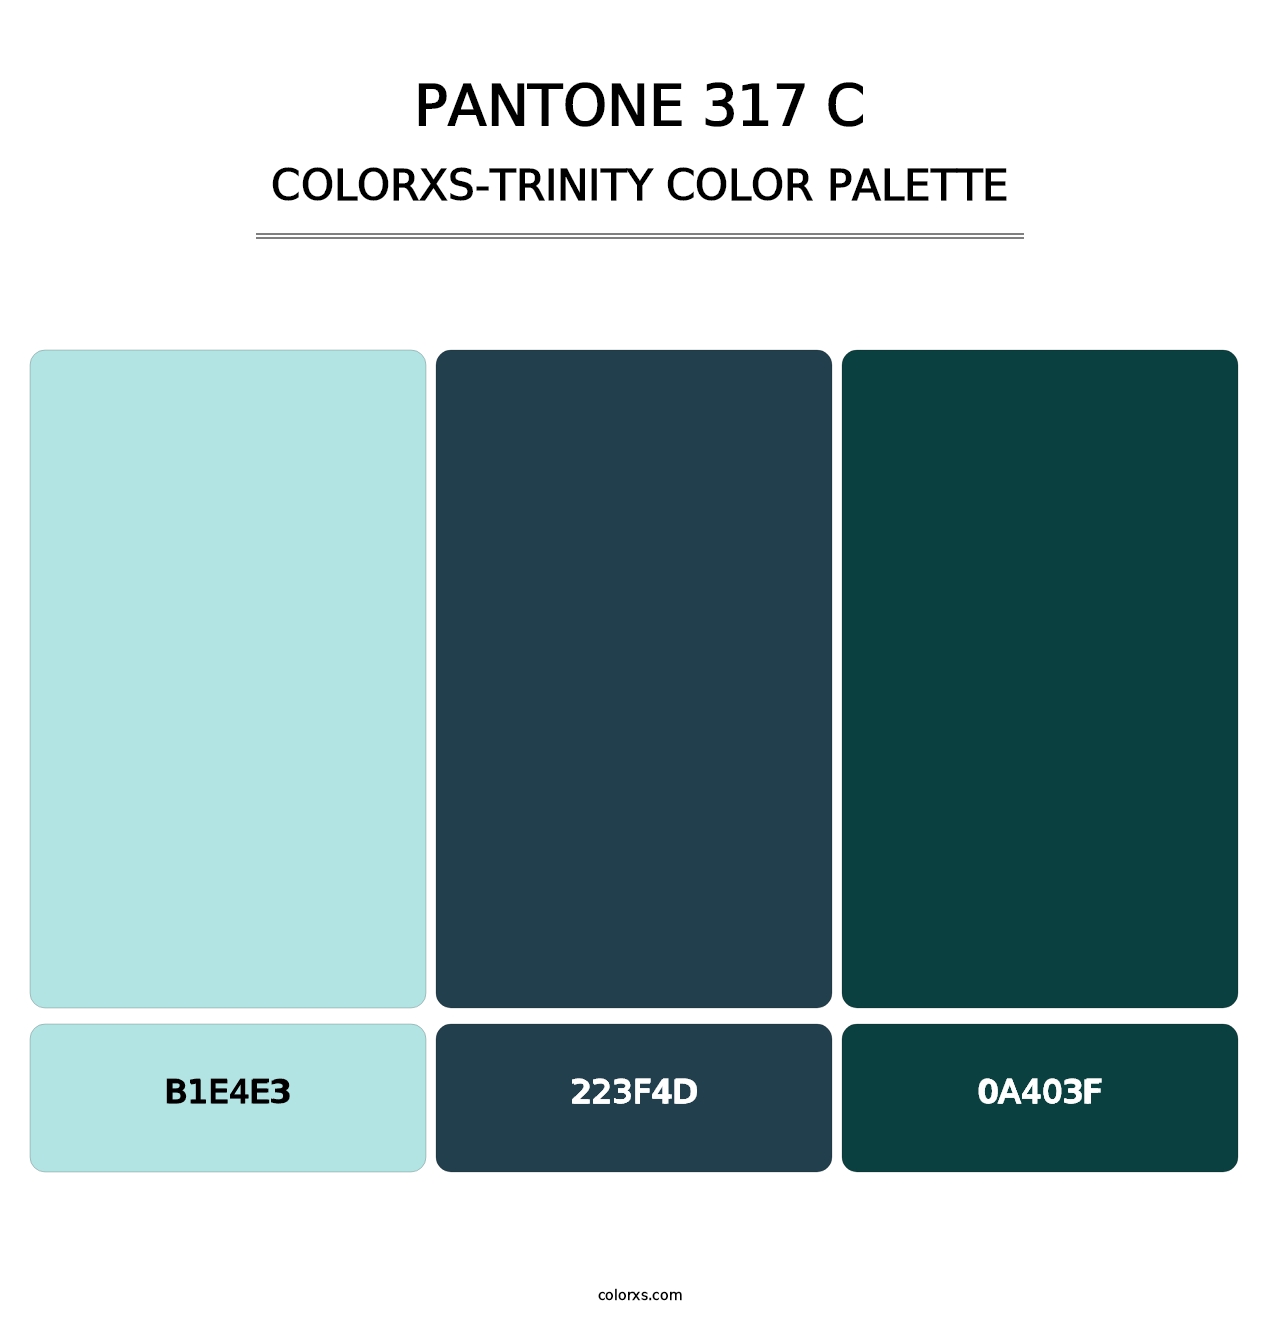 PANTONE 317 C - Colorxs Trinity Palette